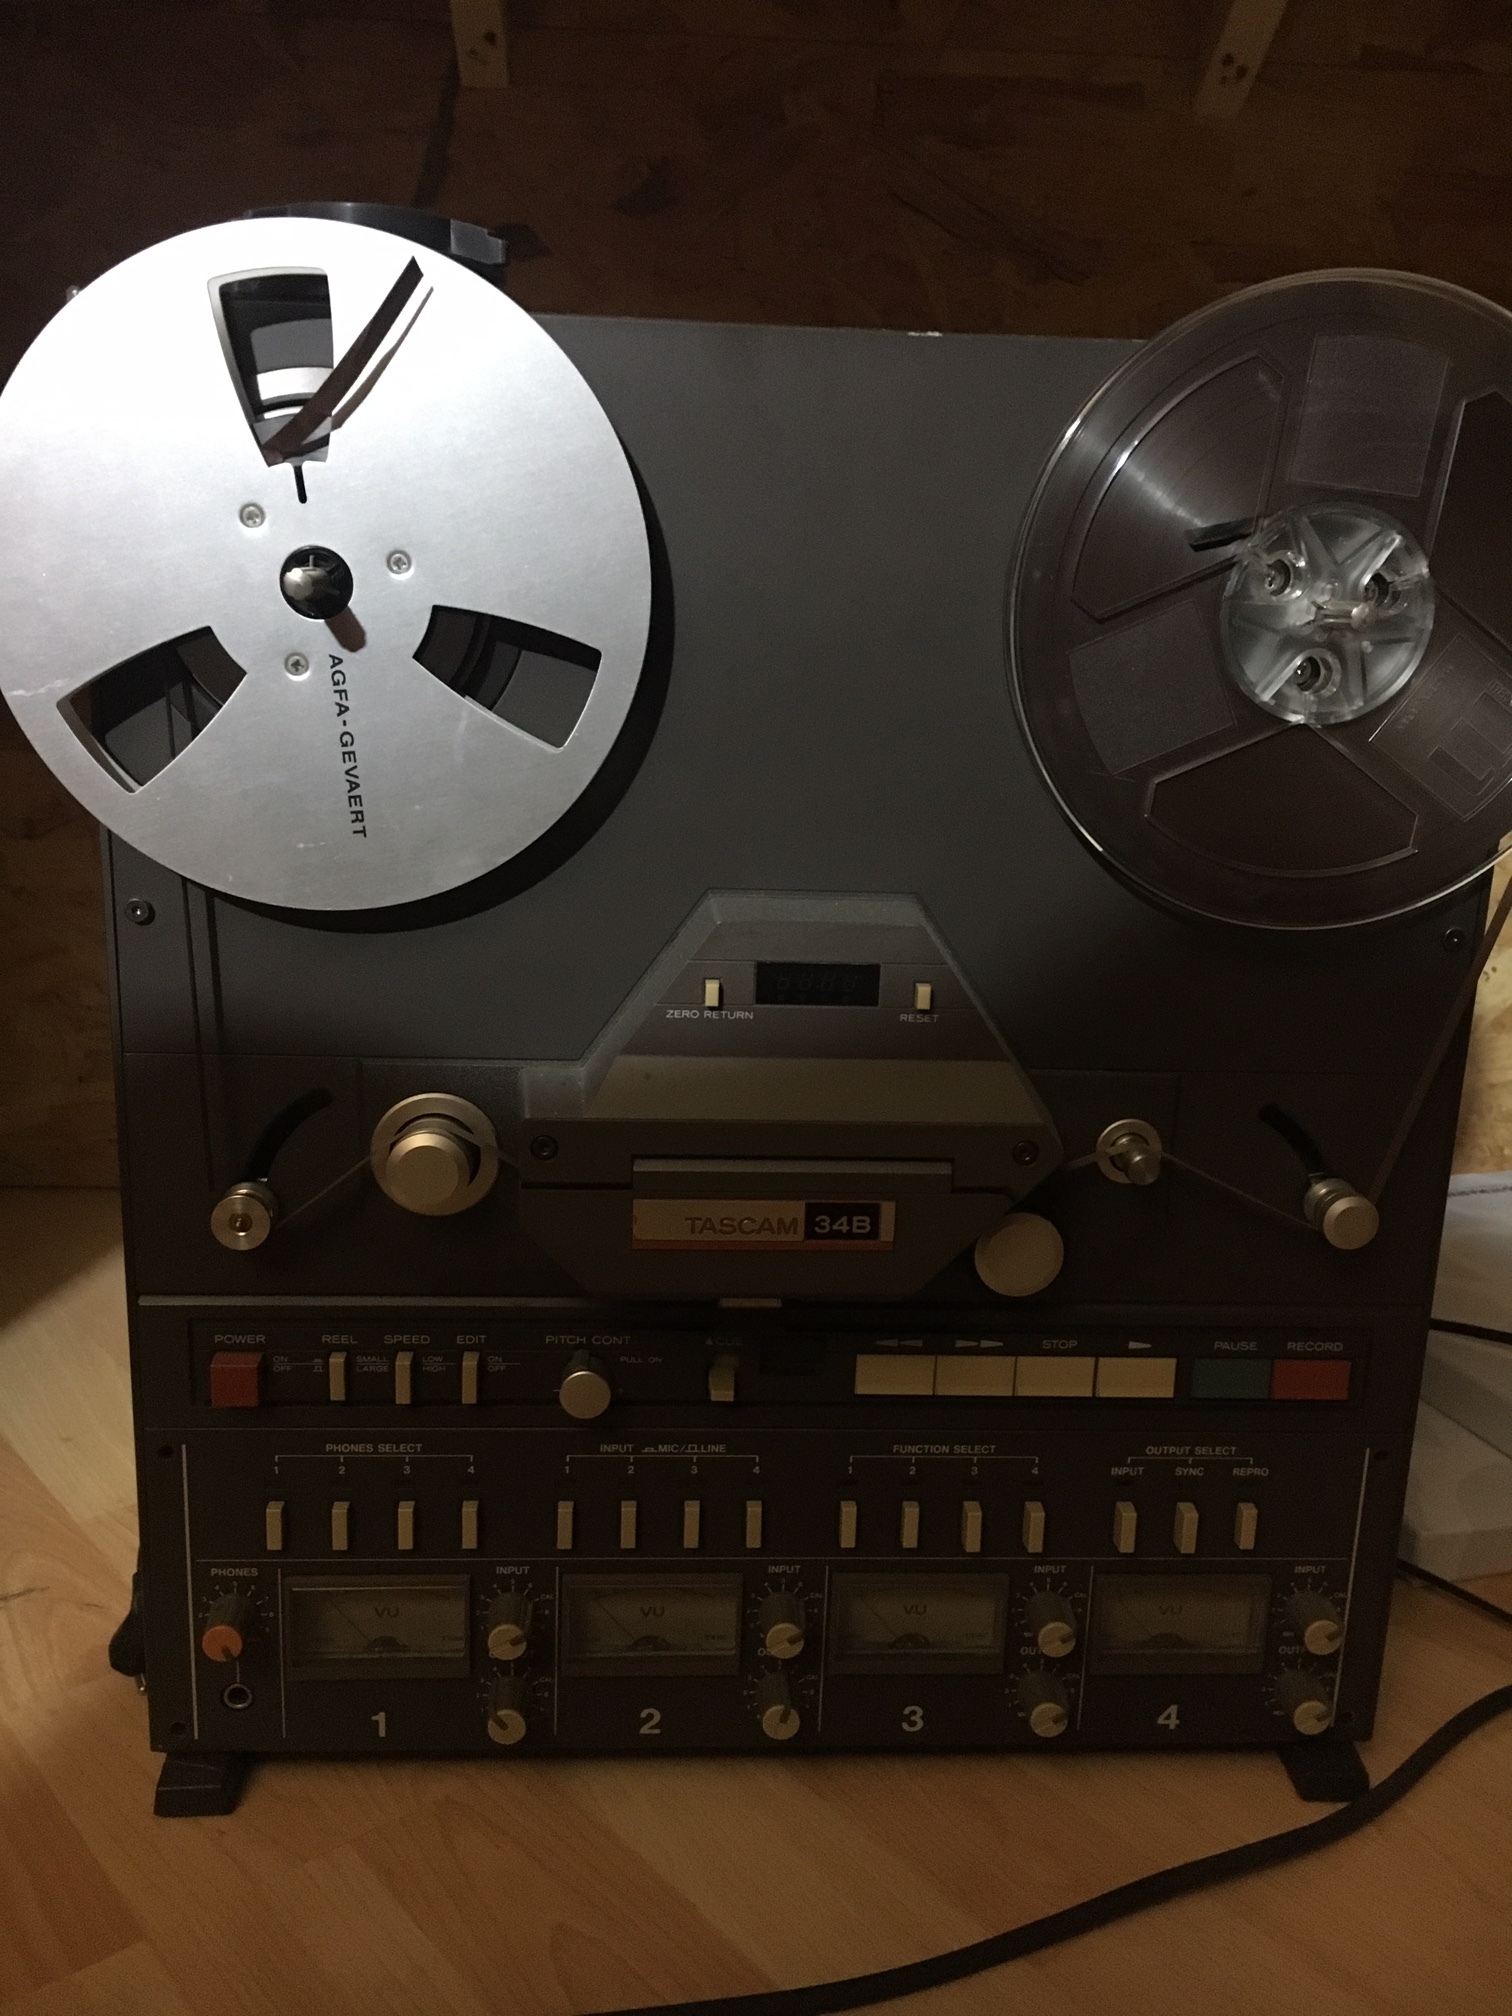 34 B - Tascam 34 B - Audiofanzine